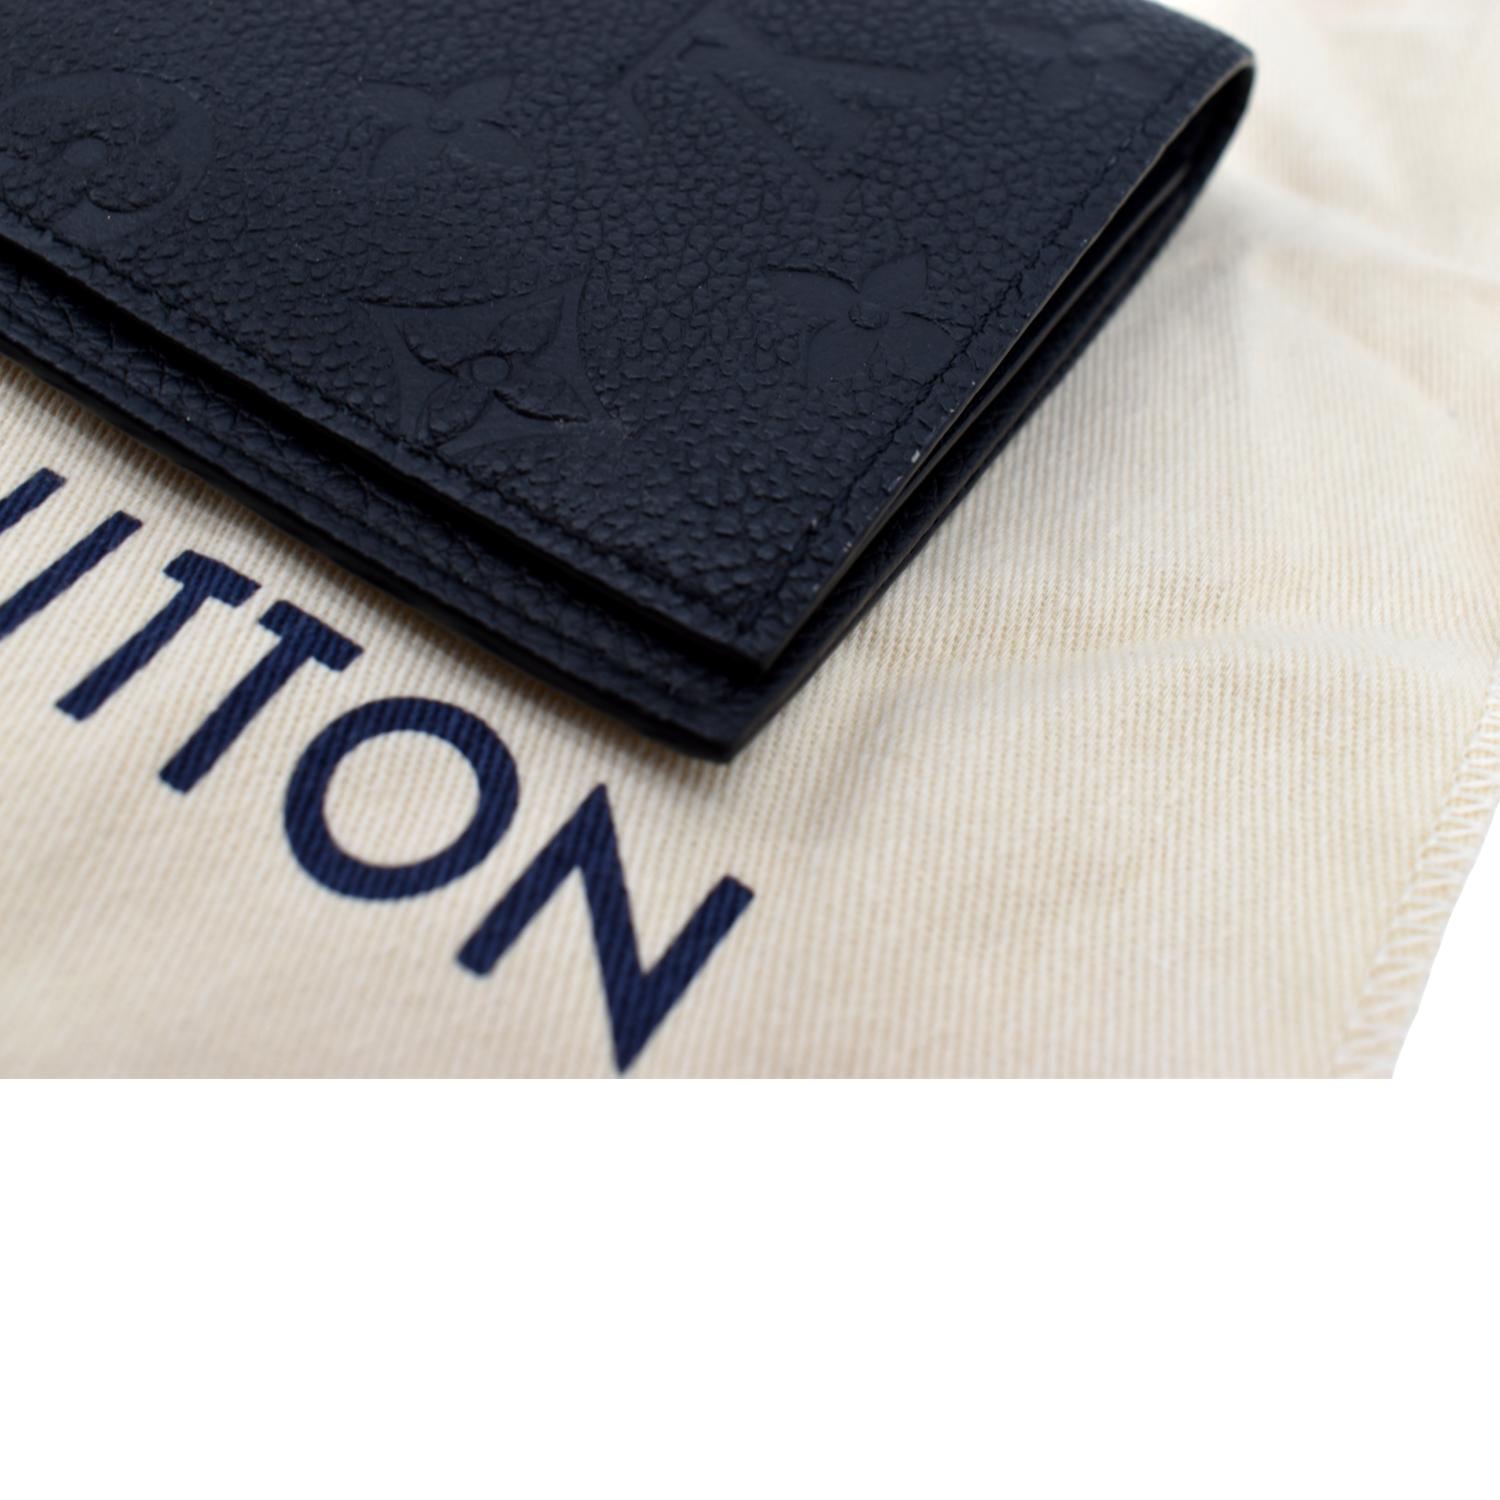 LOUIS VUITTON Monogram Empreinte Black Leather Passport Cover NEW!! Retail:  $450